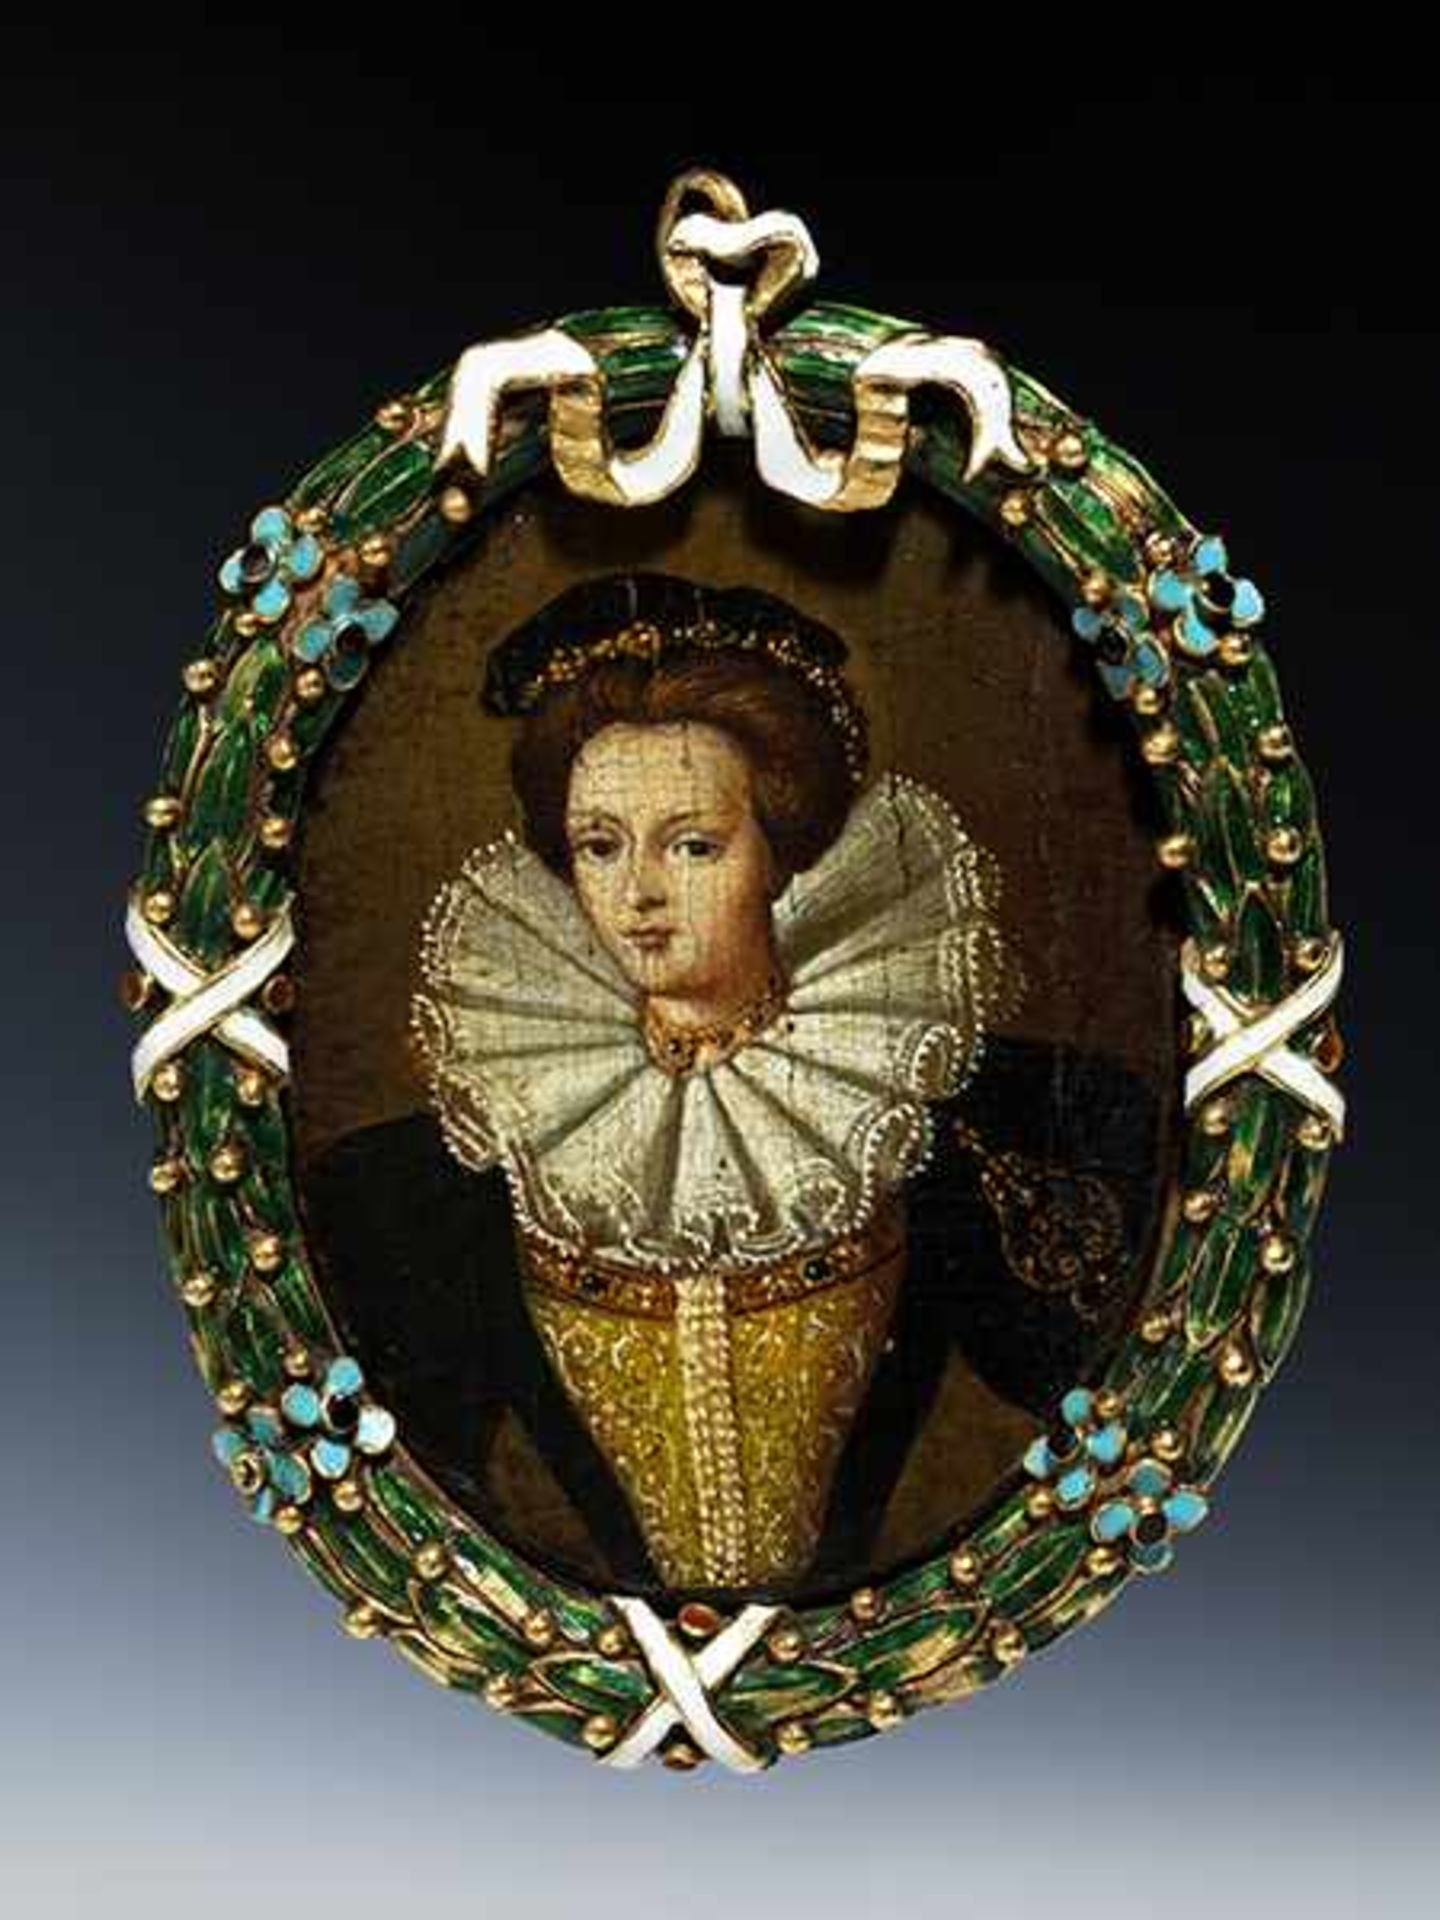 Ferdinando de' Medici, dat. 1610Musealer Miniatur-Portraitrahmen in Gold, emailliert mit eingelegtem